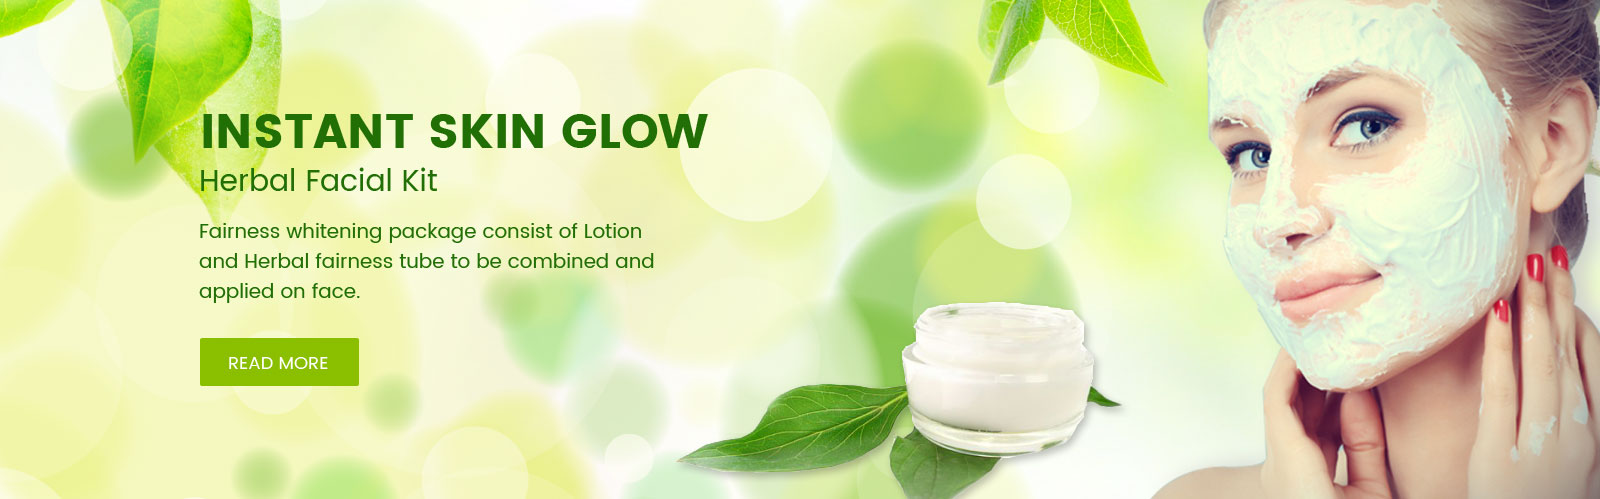 Instant Skin Glow Herbal Facial Kit